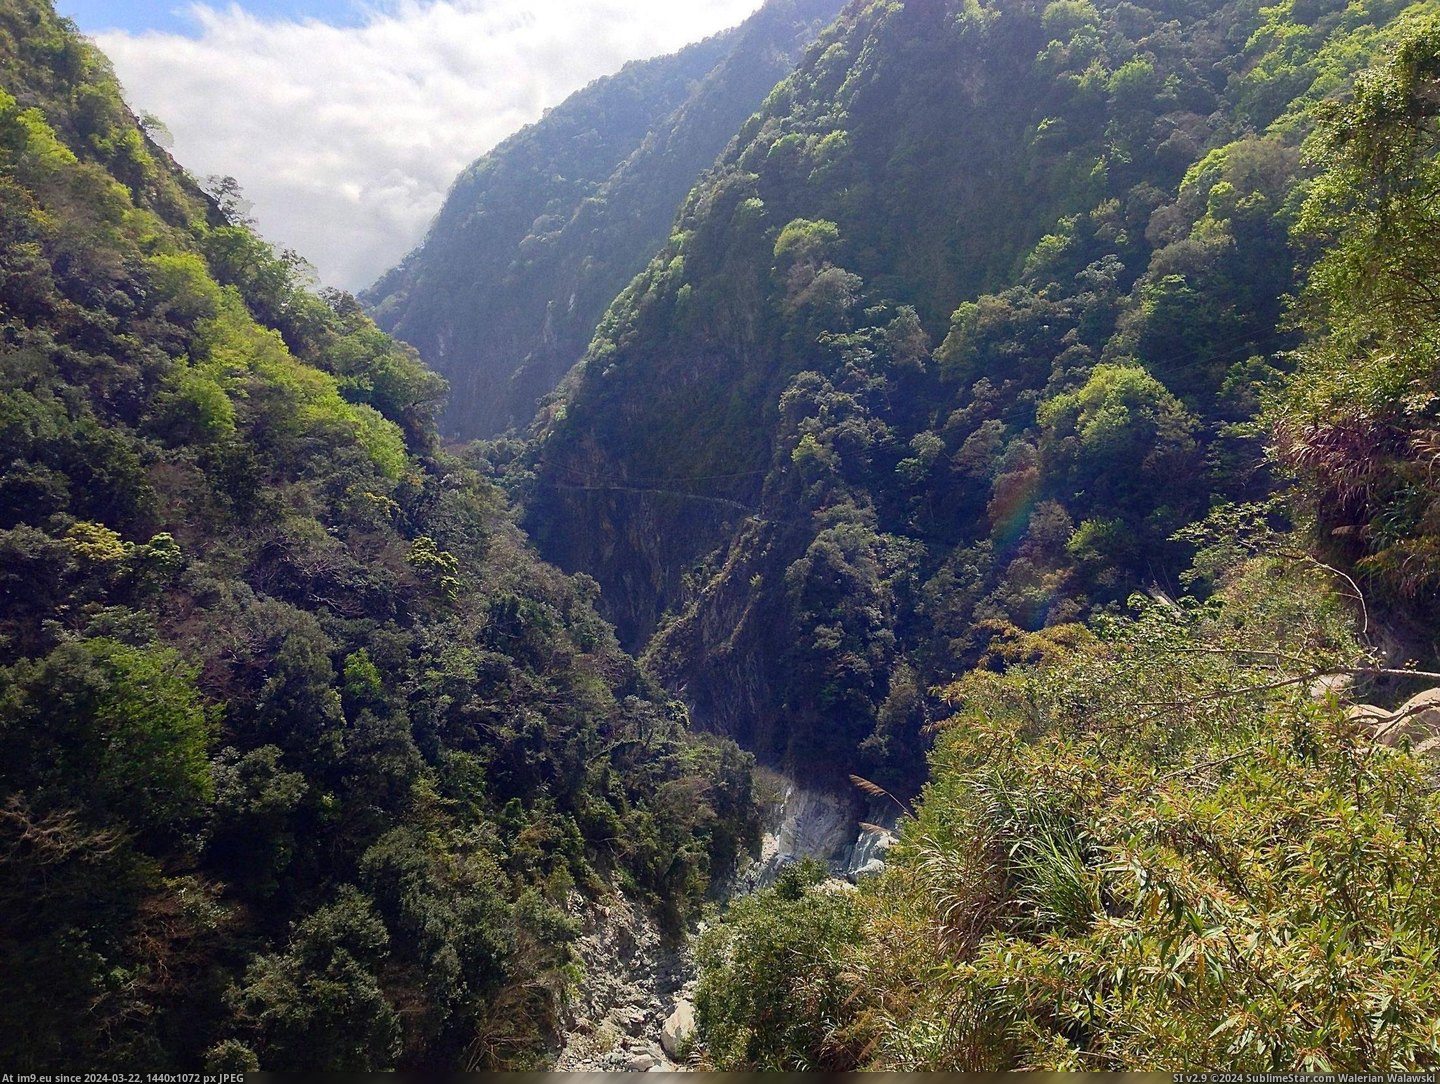 #Hiking #Taiwan #Taroko #Gorge [Earthporn] OC- Taken while hiking in Taroko Gorge, Taiwan. [2203 x 1652] Pic. (Изображение из альбом My r/EARTHPORN favs))